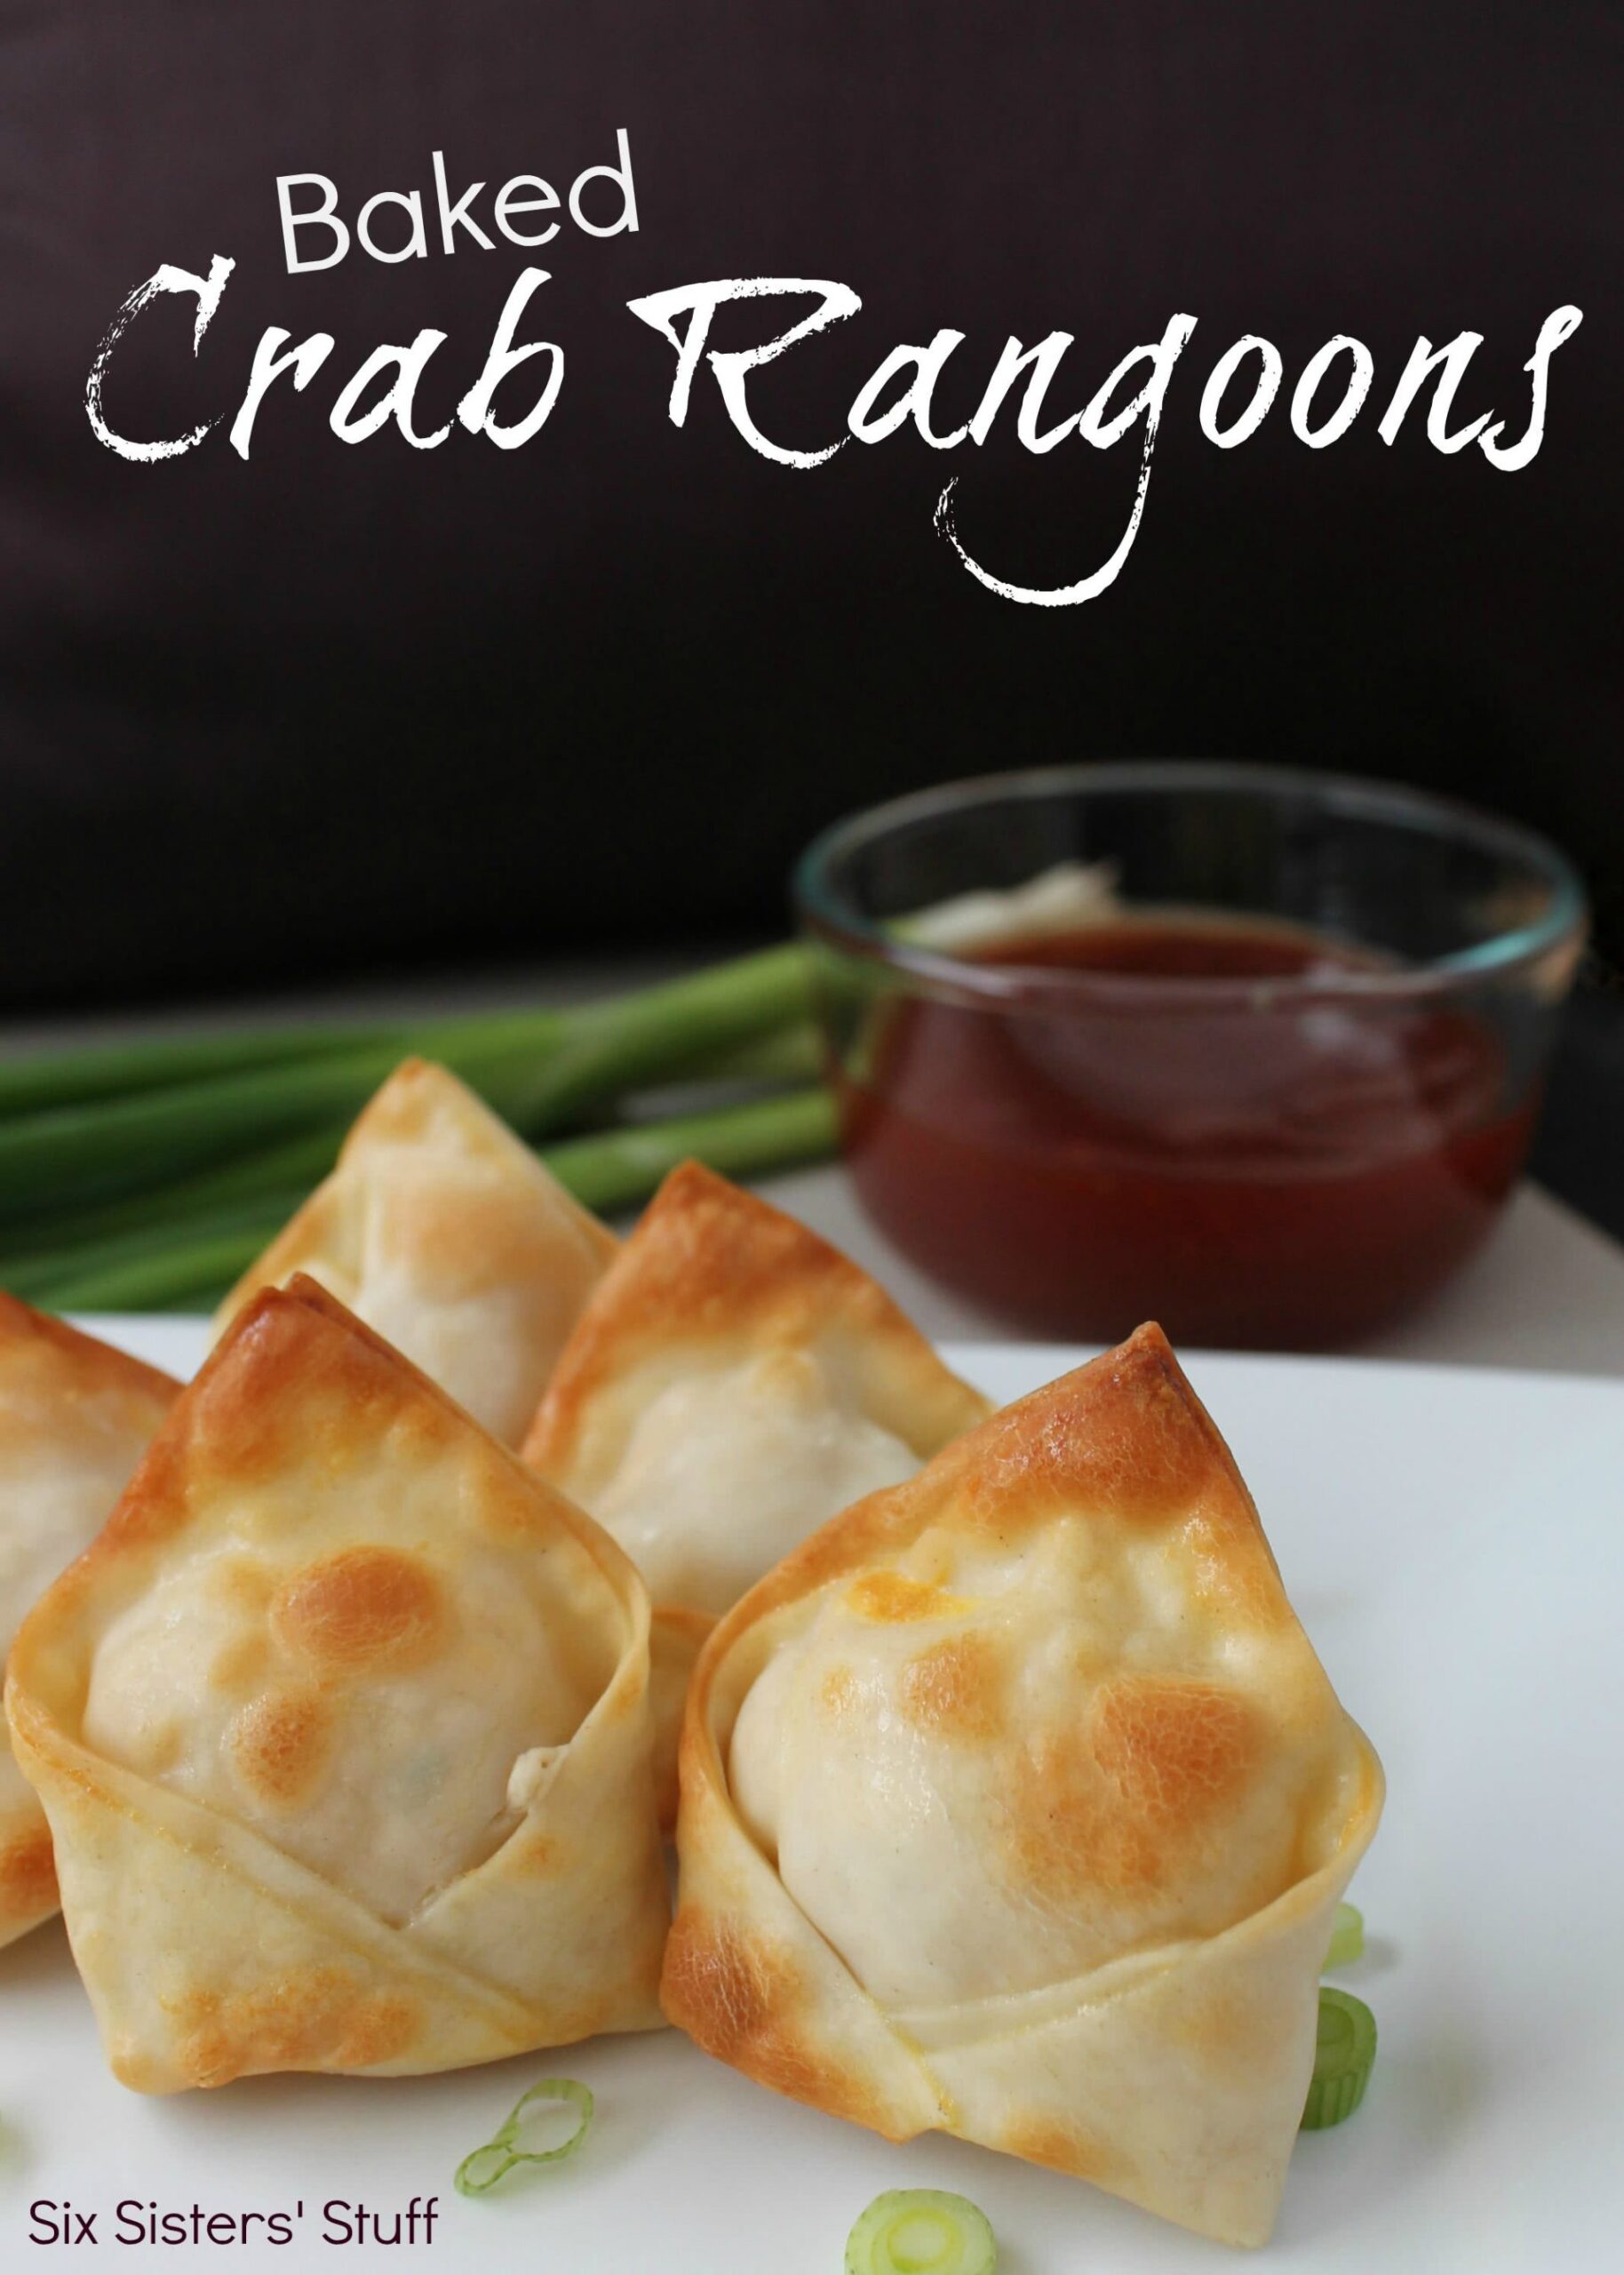 Baked Crab Rangoon Recipe
